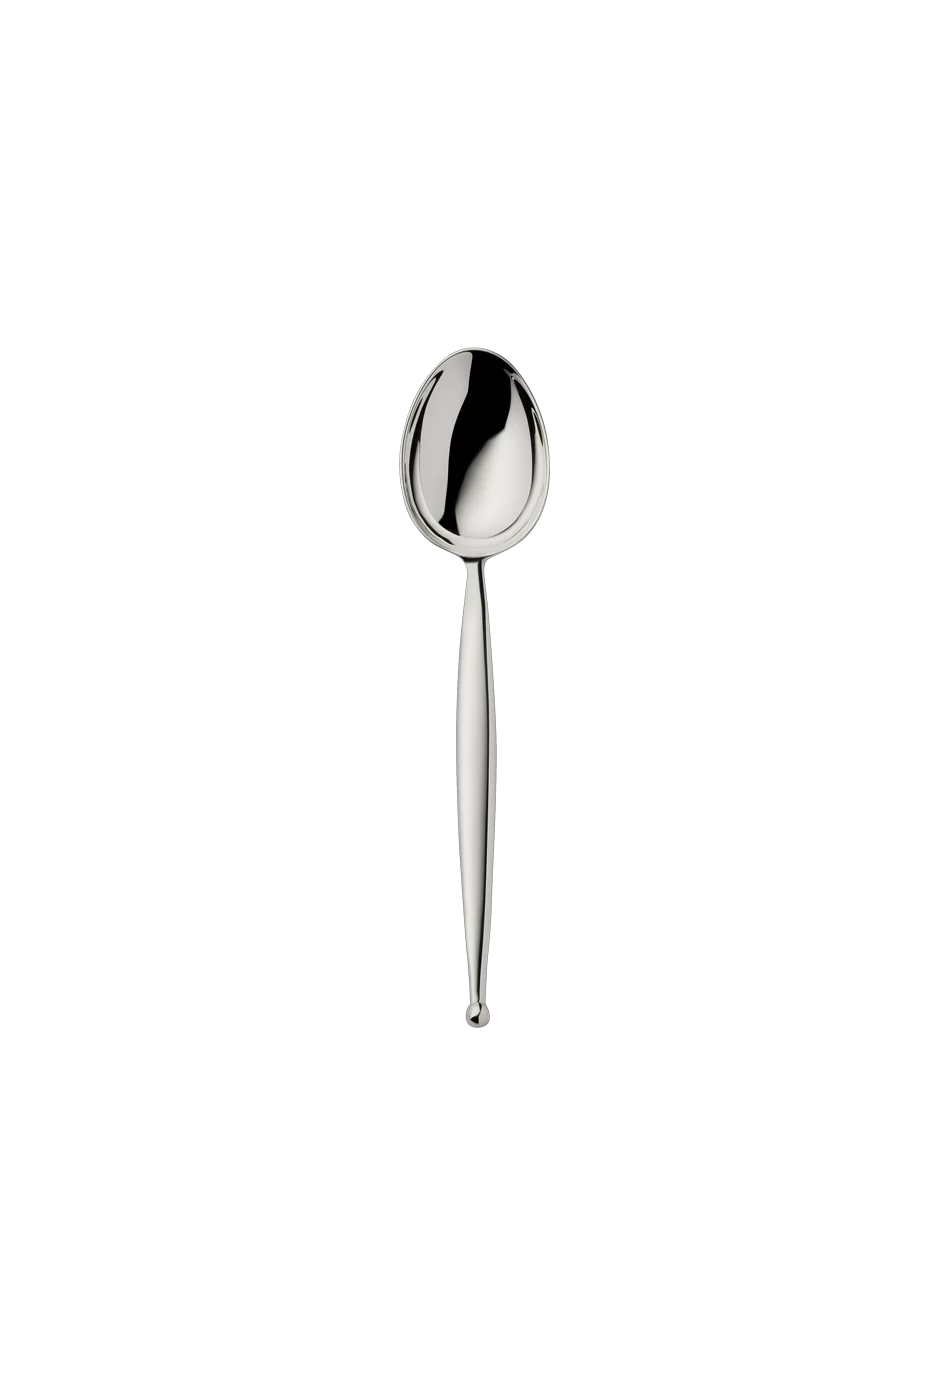 Gio Coffee Spoon 14,5 Cm (150g massive silverplated)